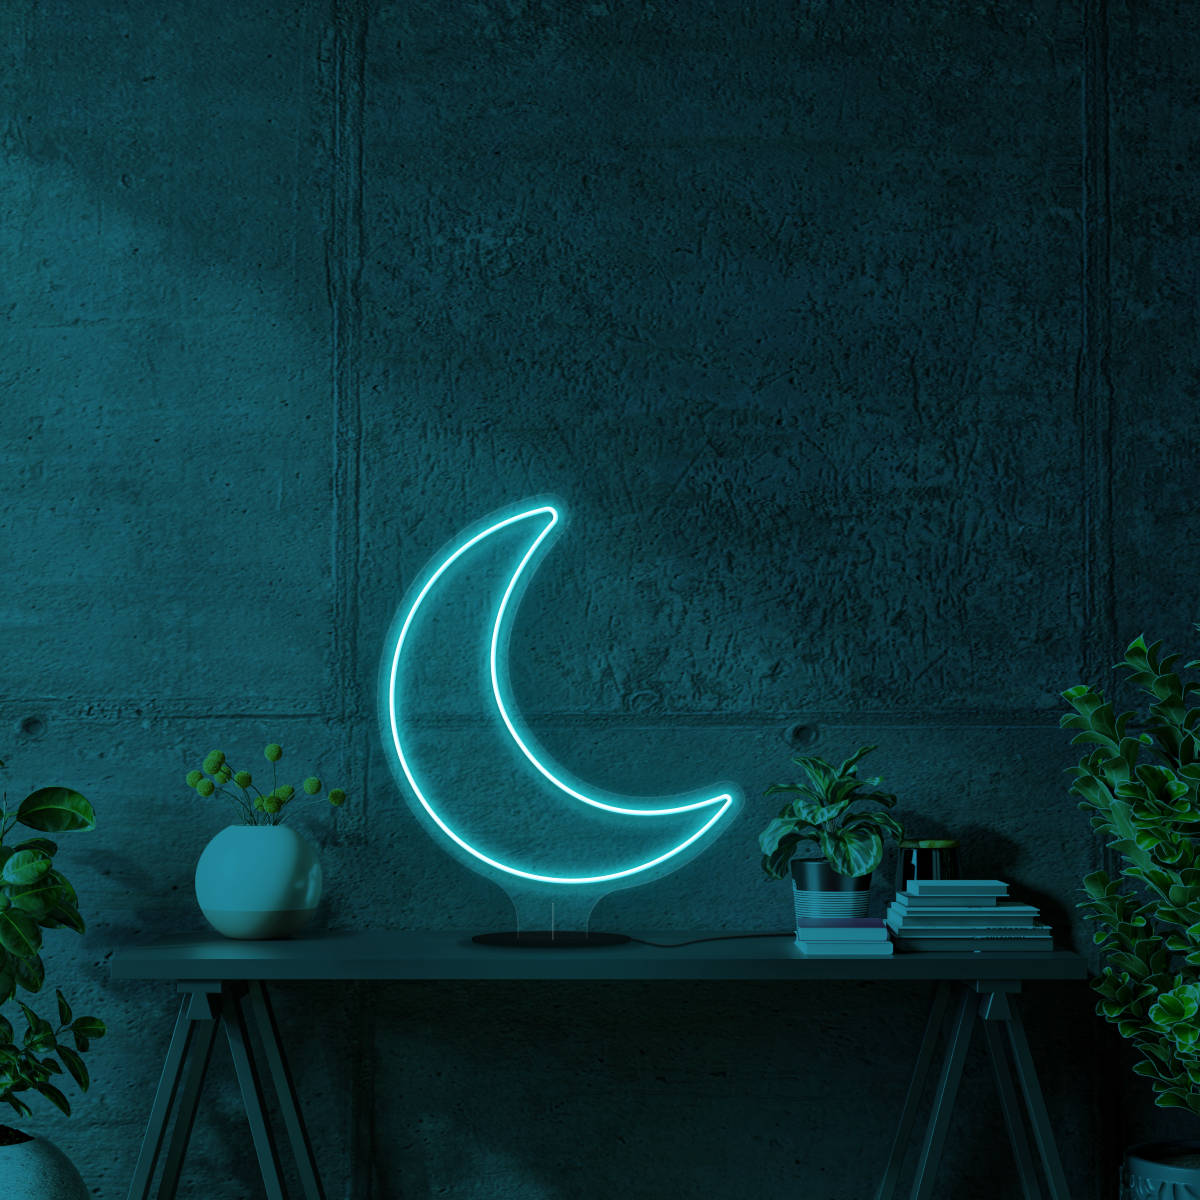 Top 999+ Neon Moon Wallpaper Full HD, 4K✅Free to Use